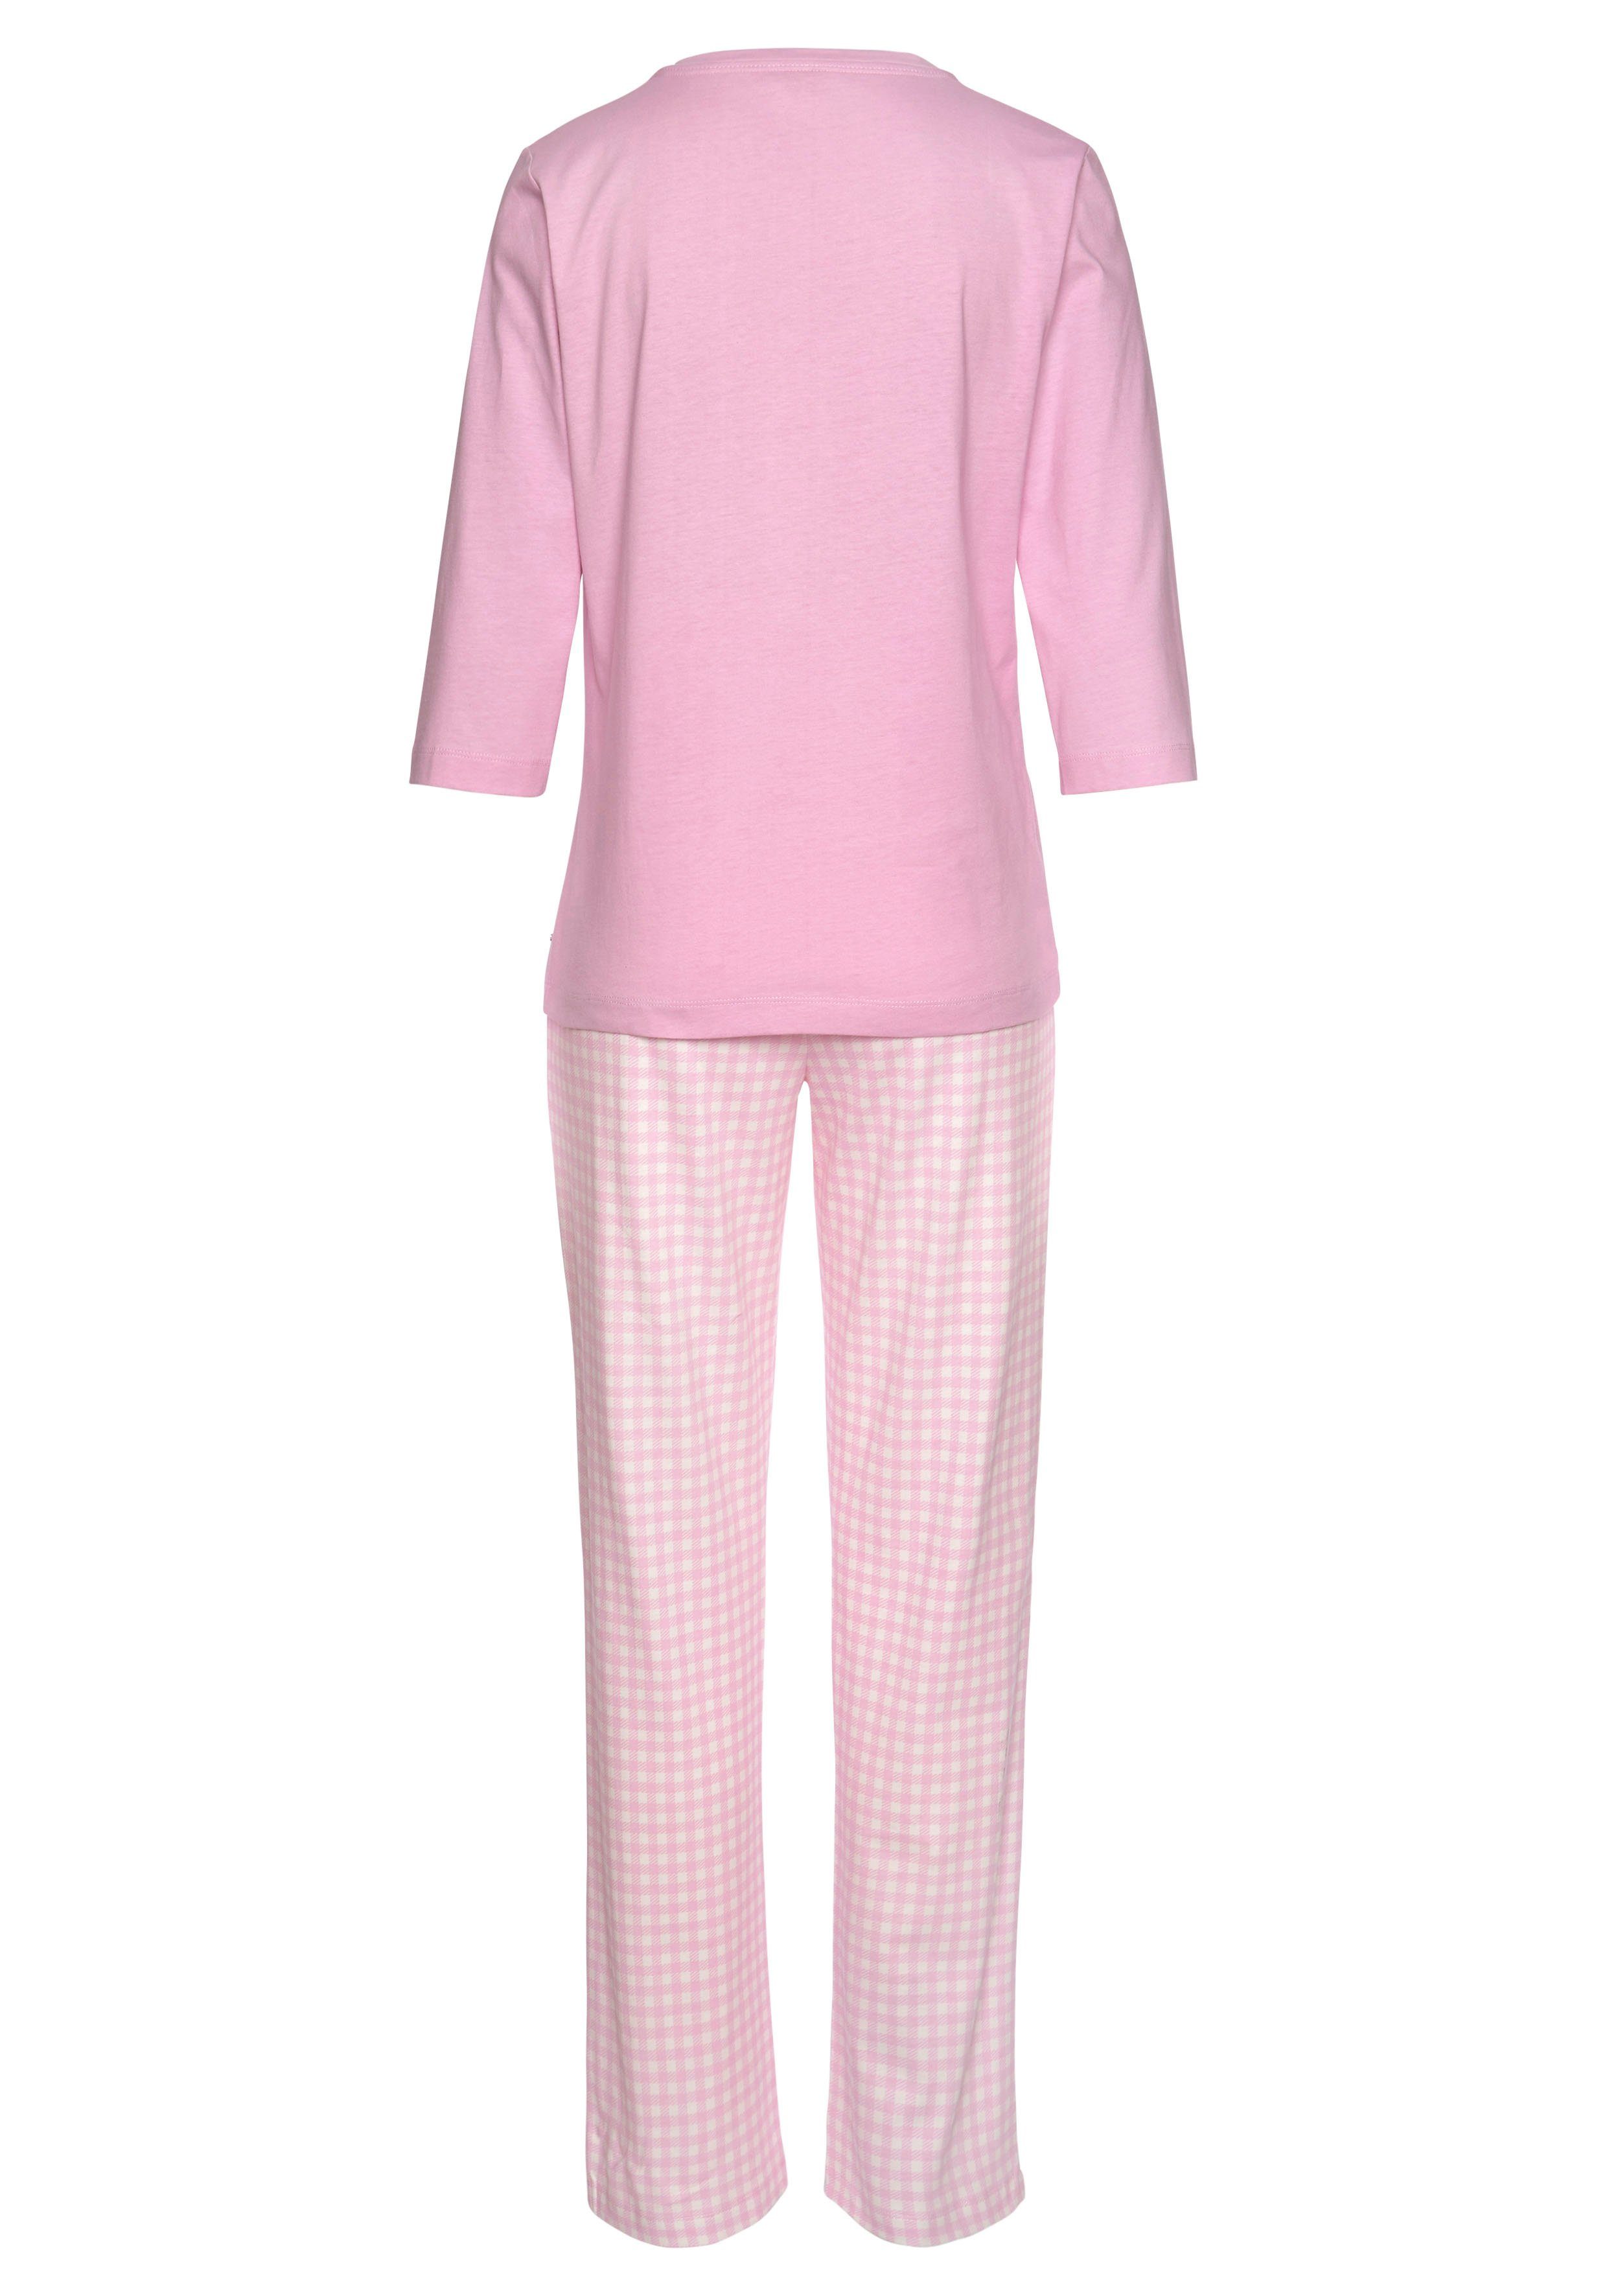 (2 1 s.Oliver Stück) tlg., rosa-kariert Pyjama